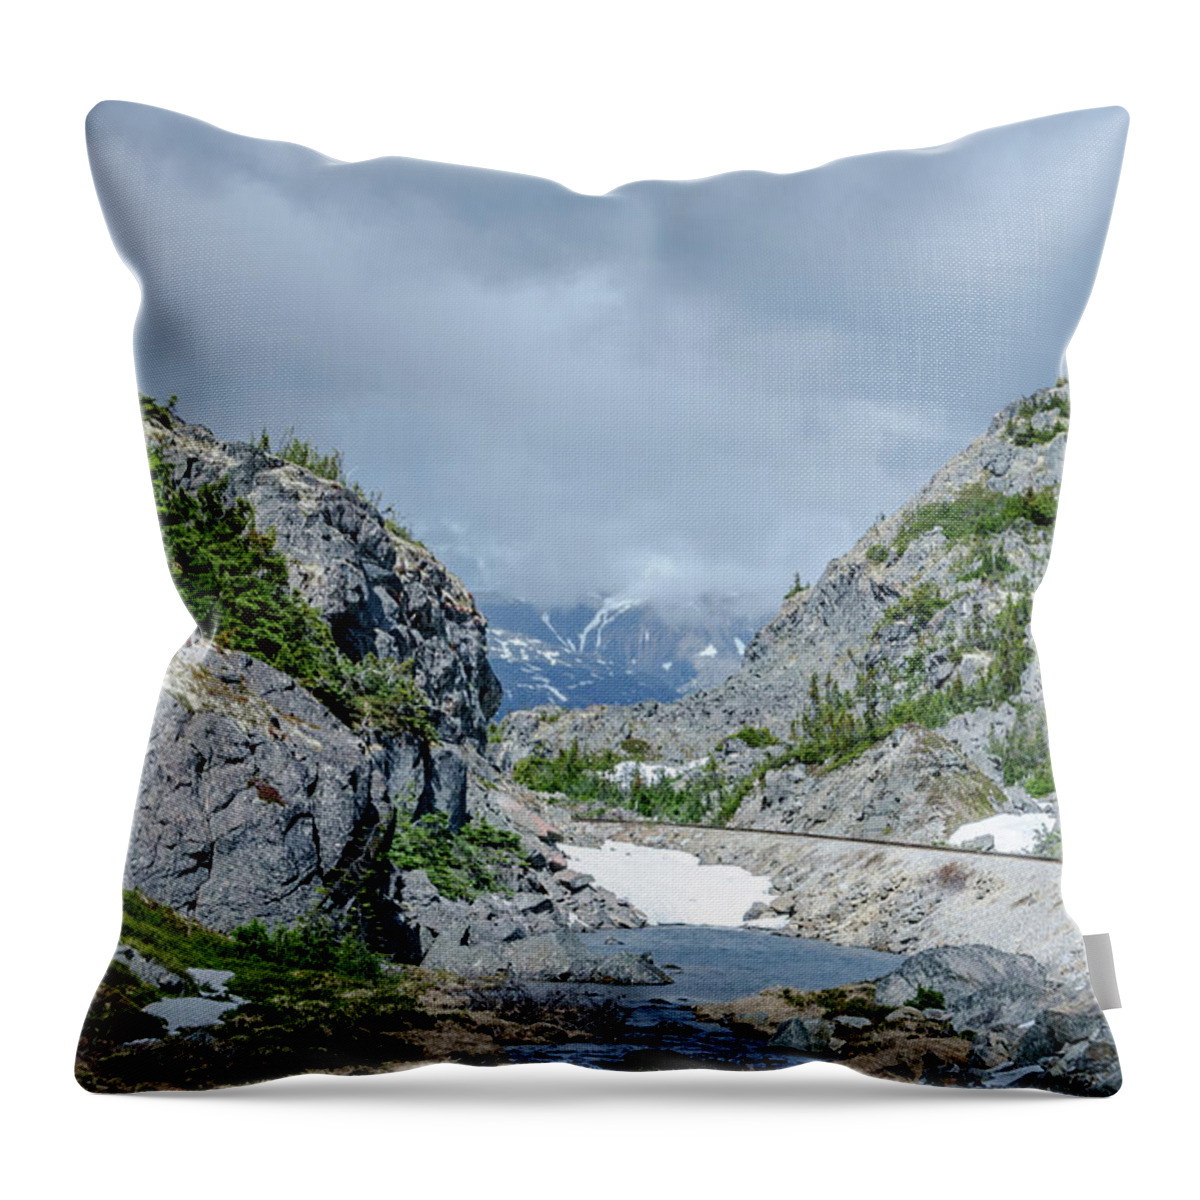  Landscape Throw Pillow featuring the photograph Skagway Alaska by Jaime Mercado